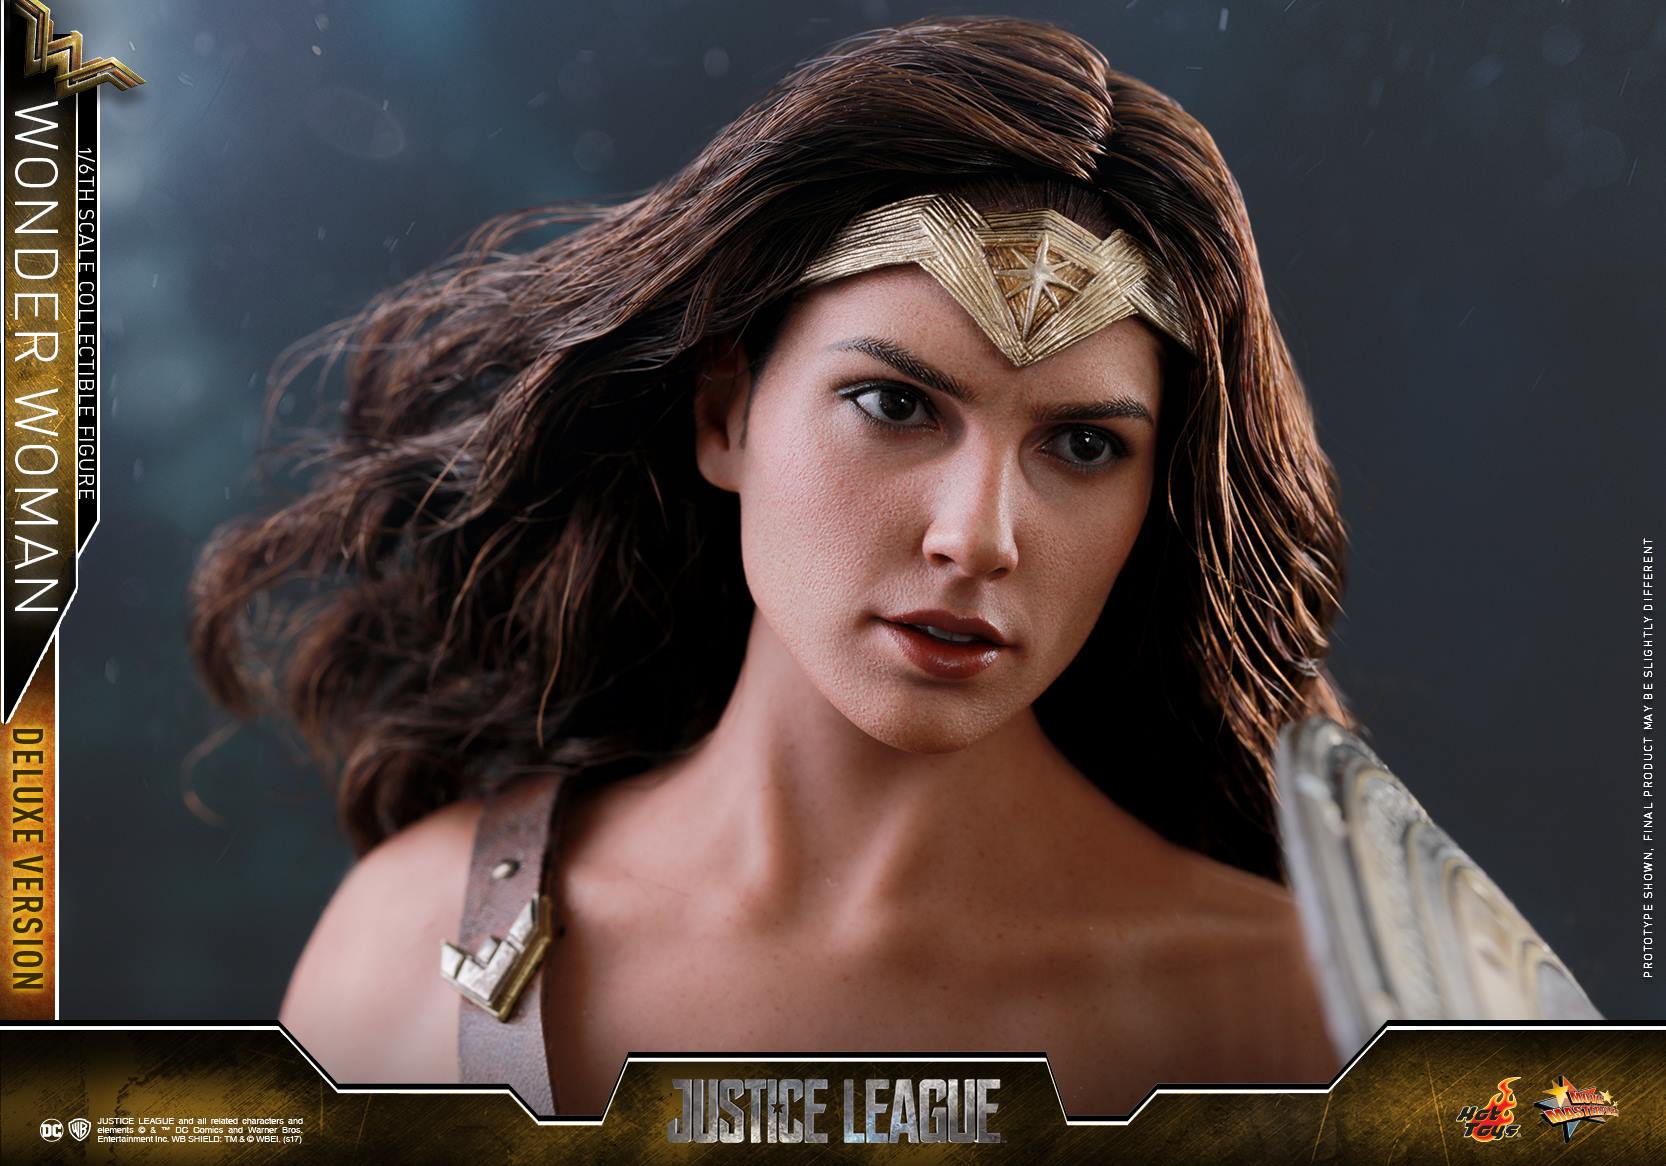 Hot Toys - MMS450 - Justice League - Wonder Woman - Marvelous Toys